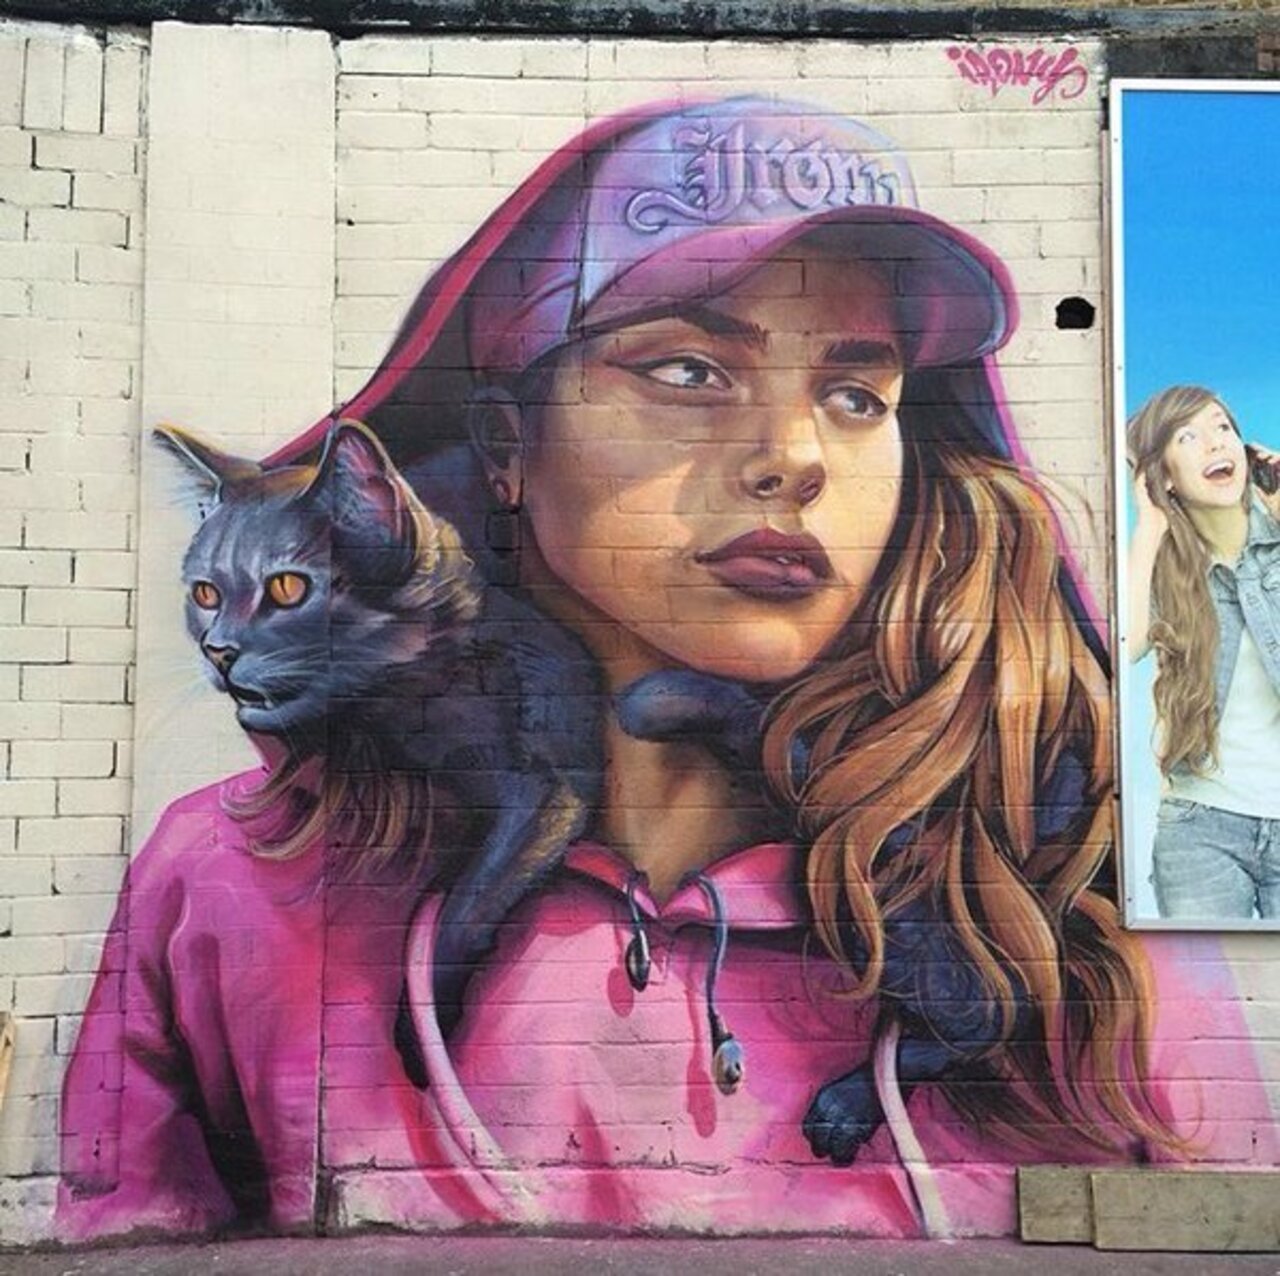 Whoamirony Found in Toothing London #art #mural #graffiti #streetart https://t.co/xqPb0bbjpf